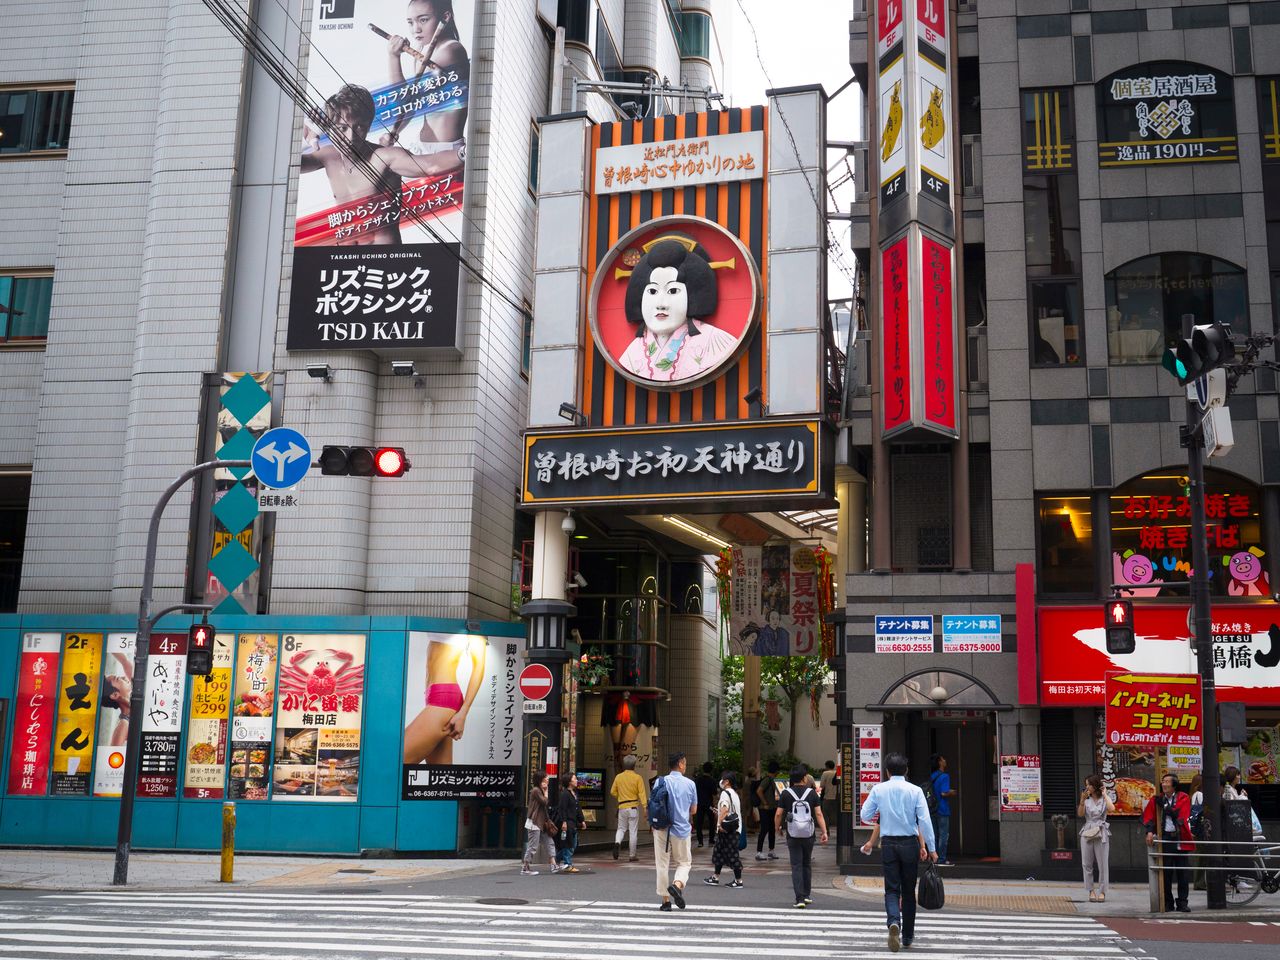 “Kita（北）”也建有大阪风情的商业街和地下街。图为约100家大小店铺毗连的“曾根崎初天神通商业街”